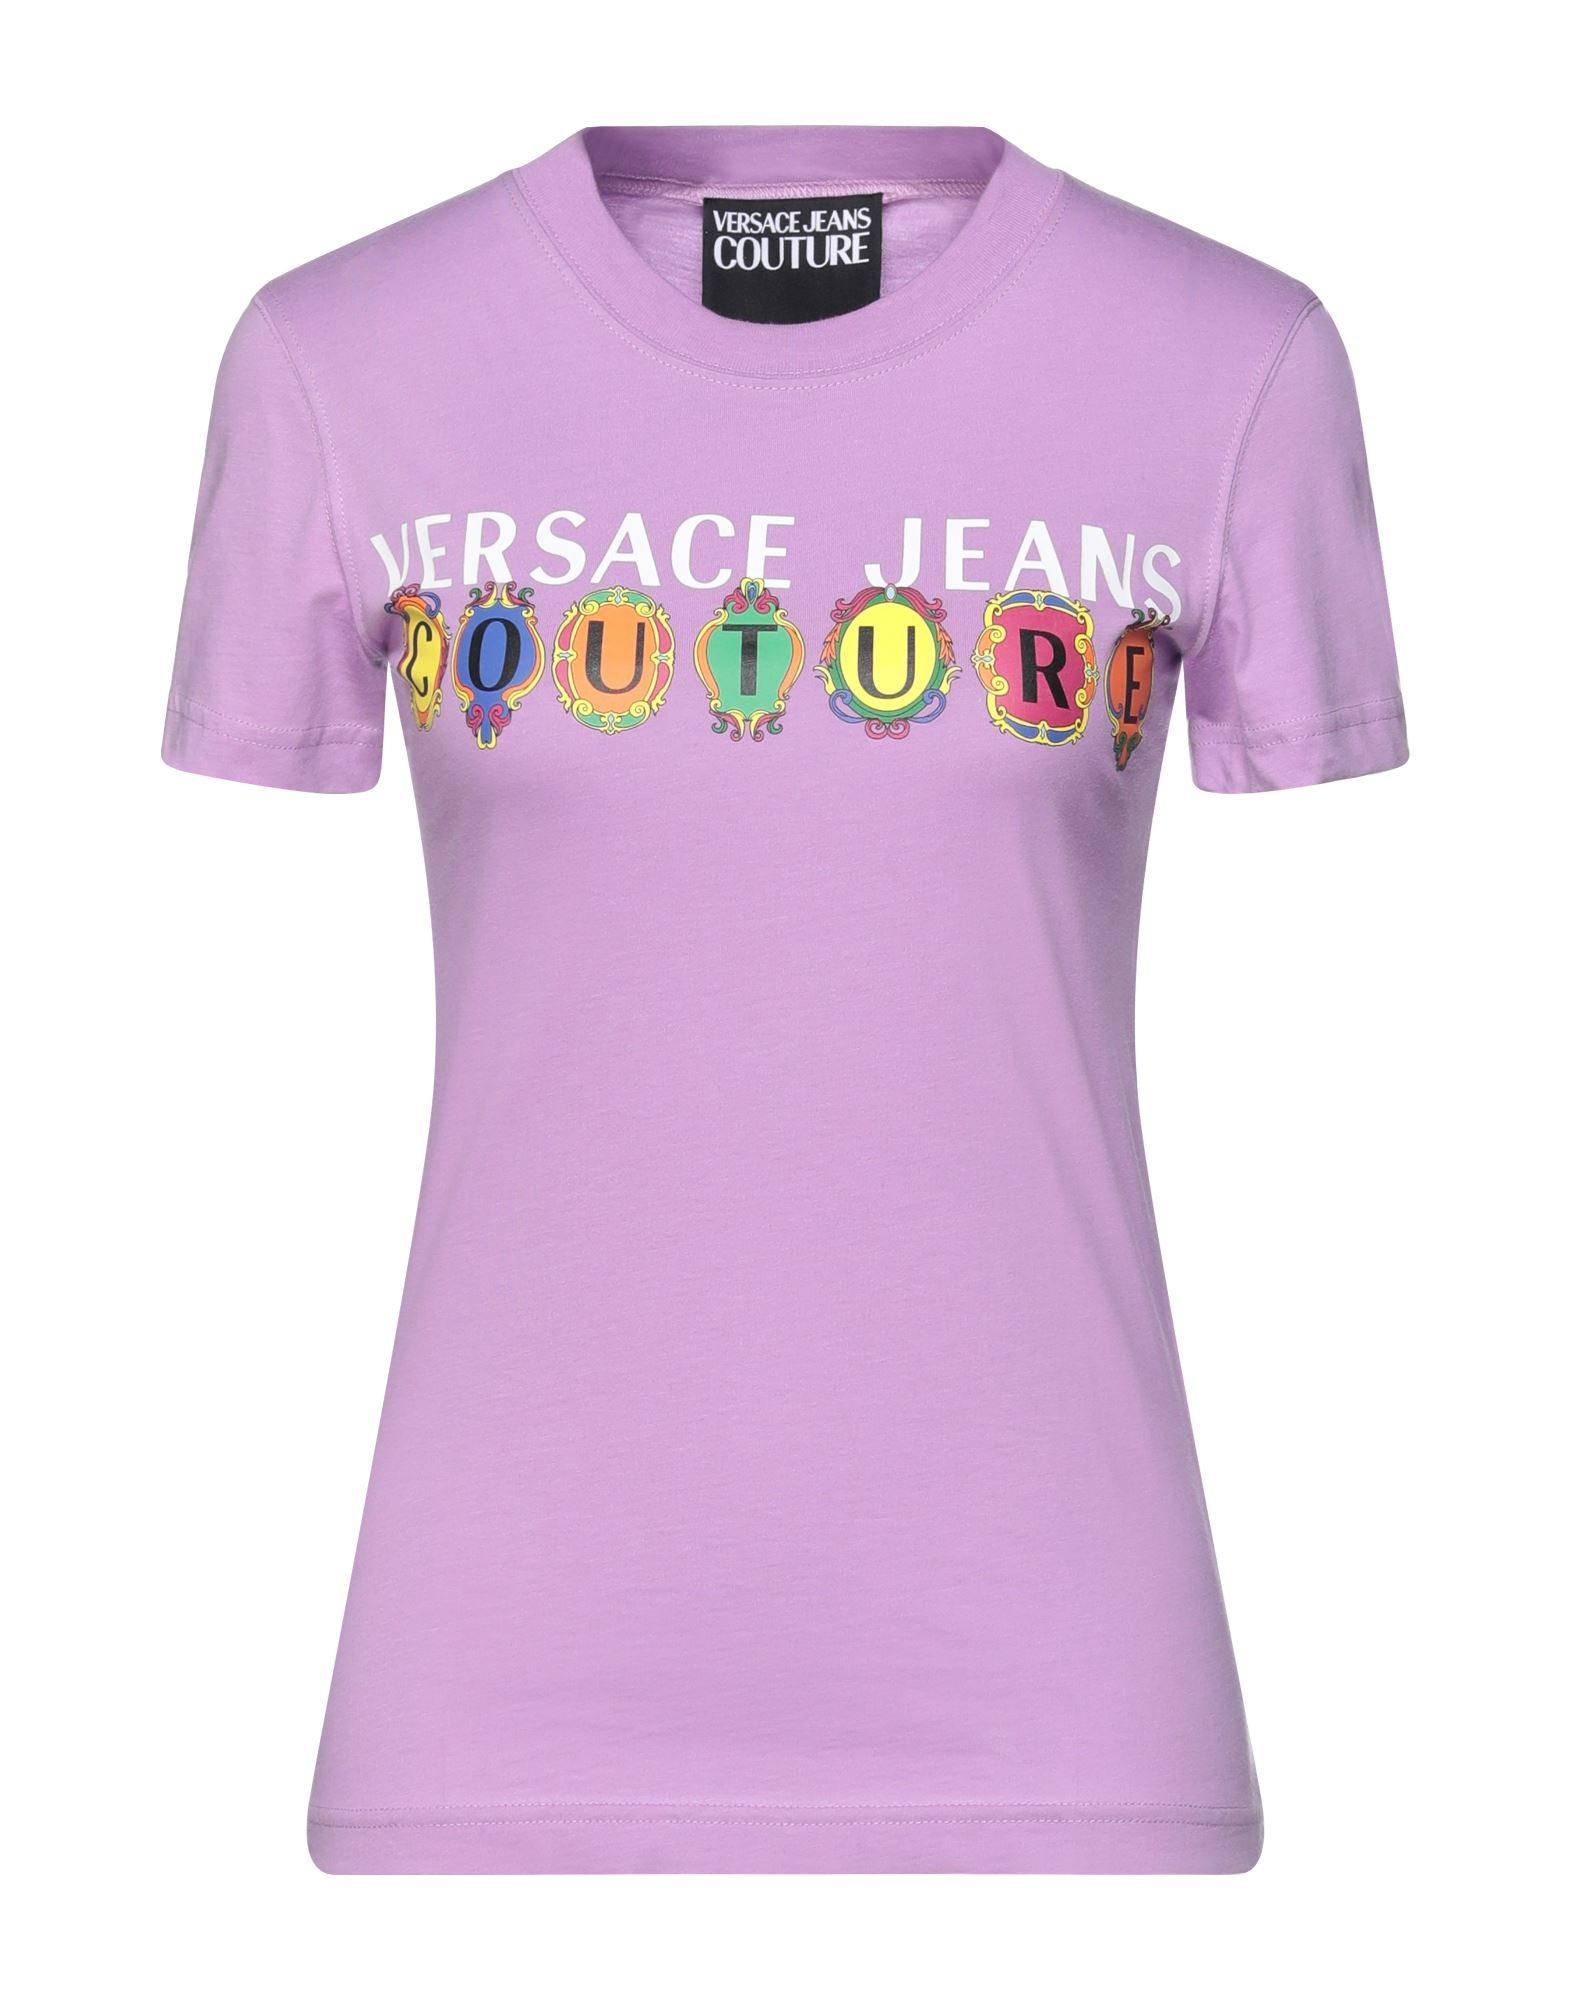 VERSACE JEANS COUTURE T-shirts Damen Malve von VERSACE JEANS COUTURE